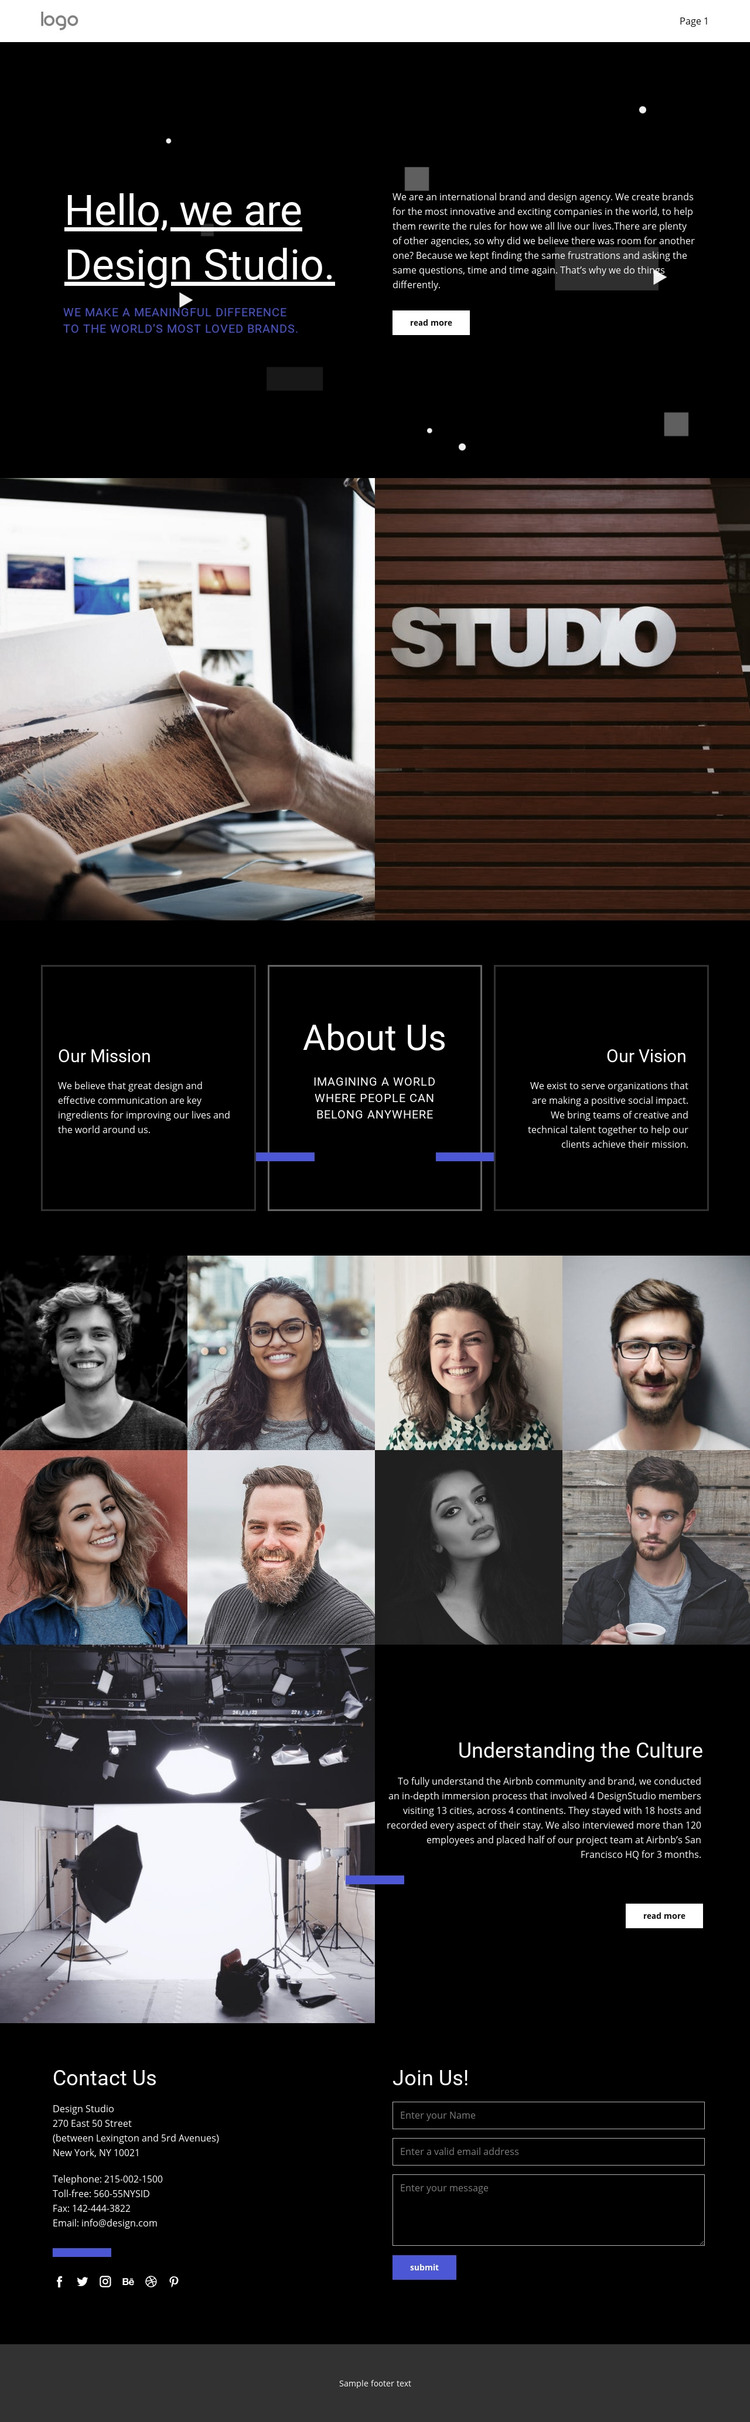 Our design is unique Homepage Design